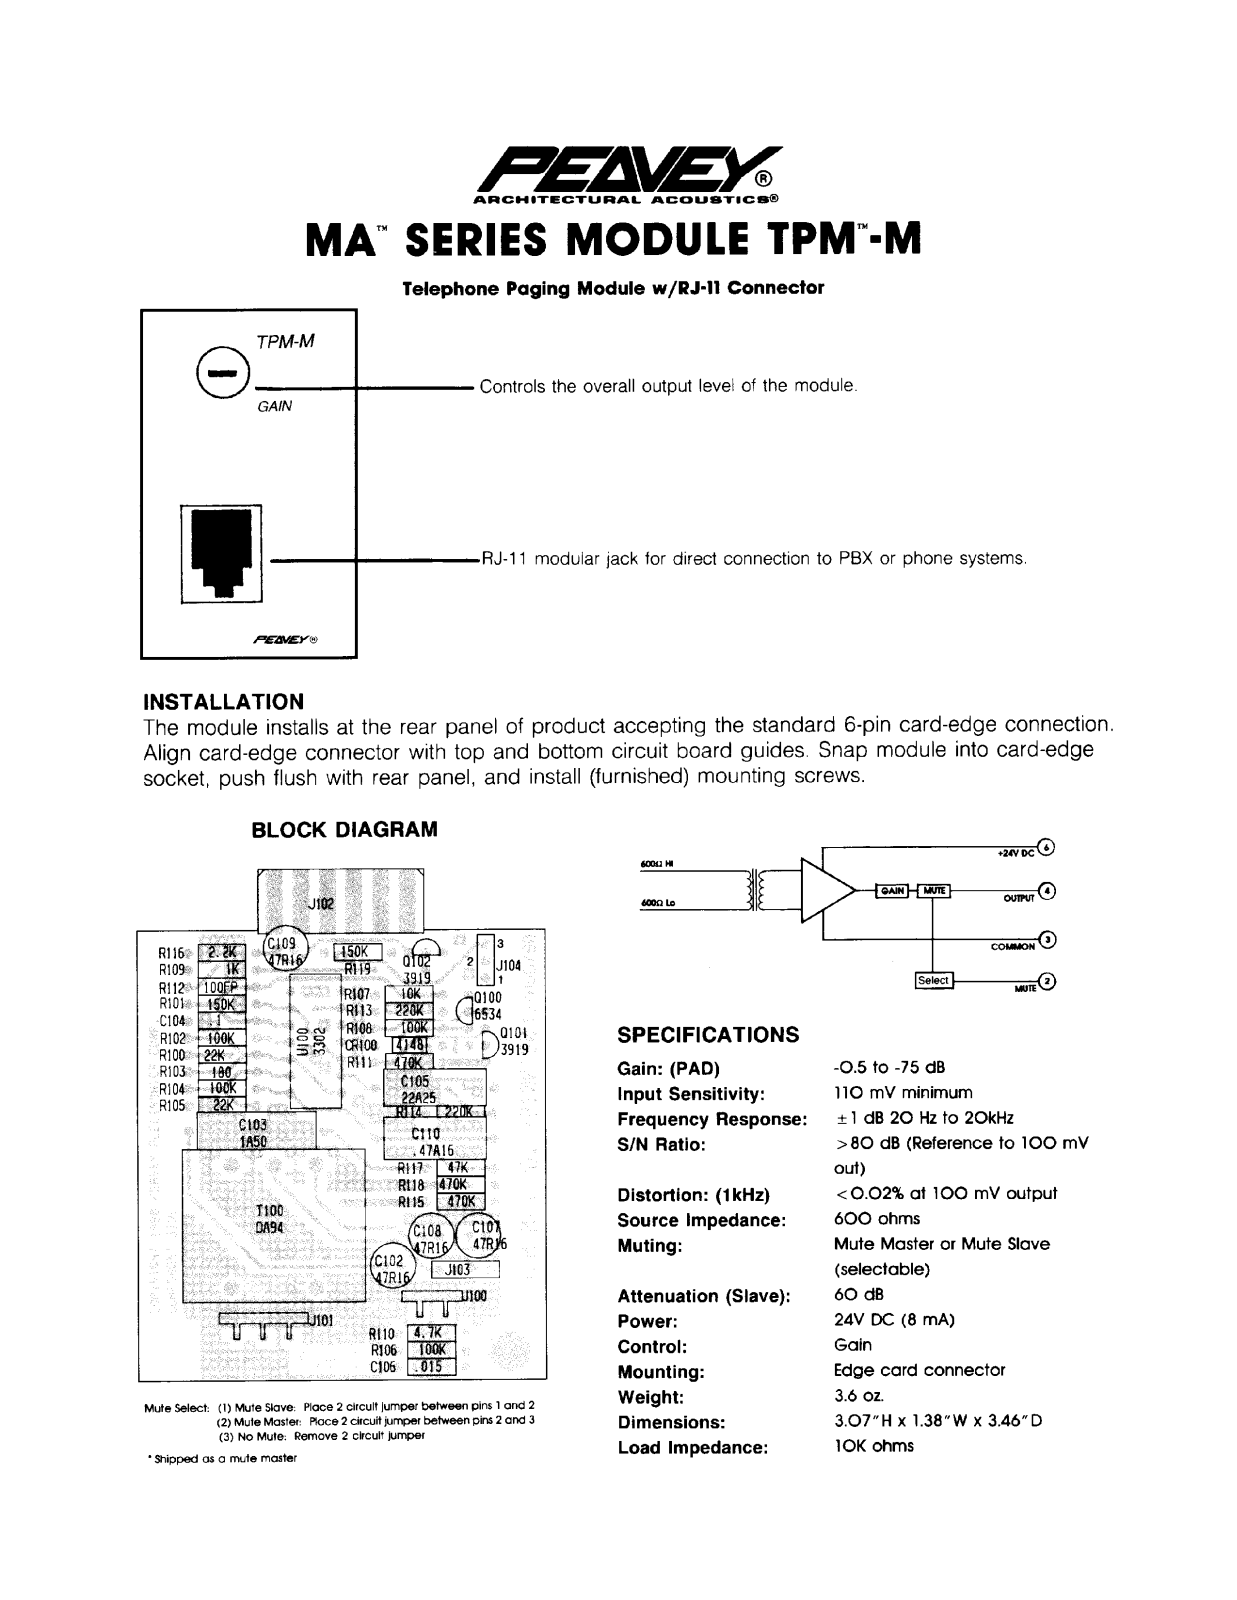 Peavey MA Series MODULE TPM-M INSTALLATION GUIDE